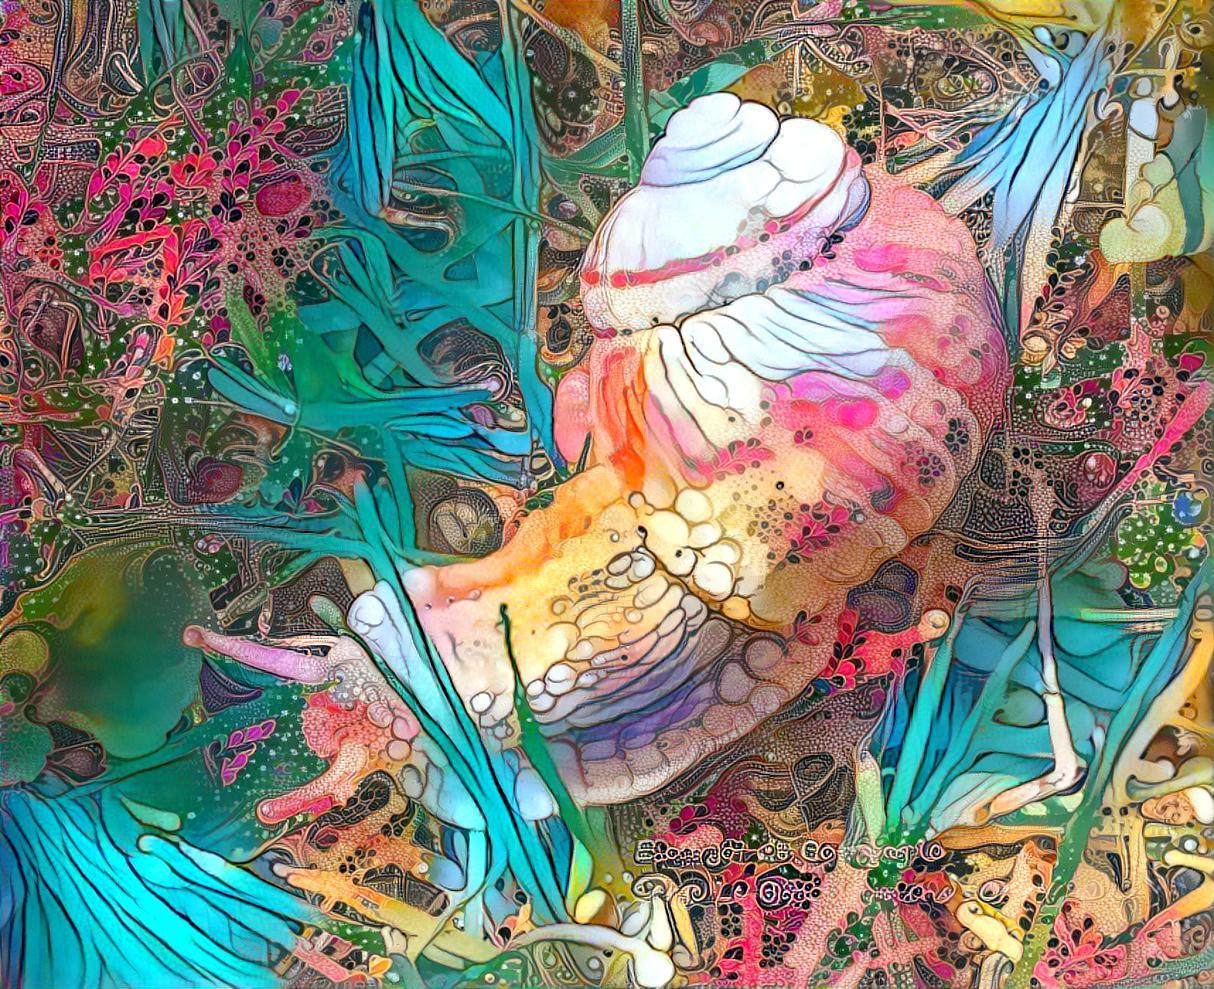 snail away